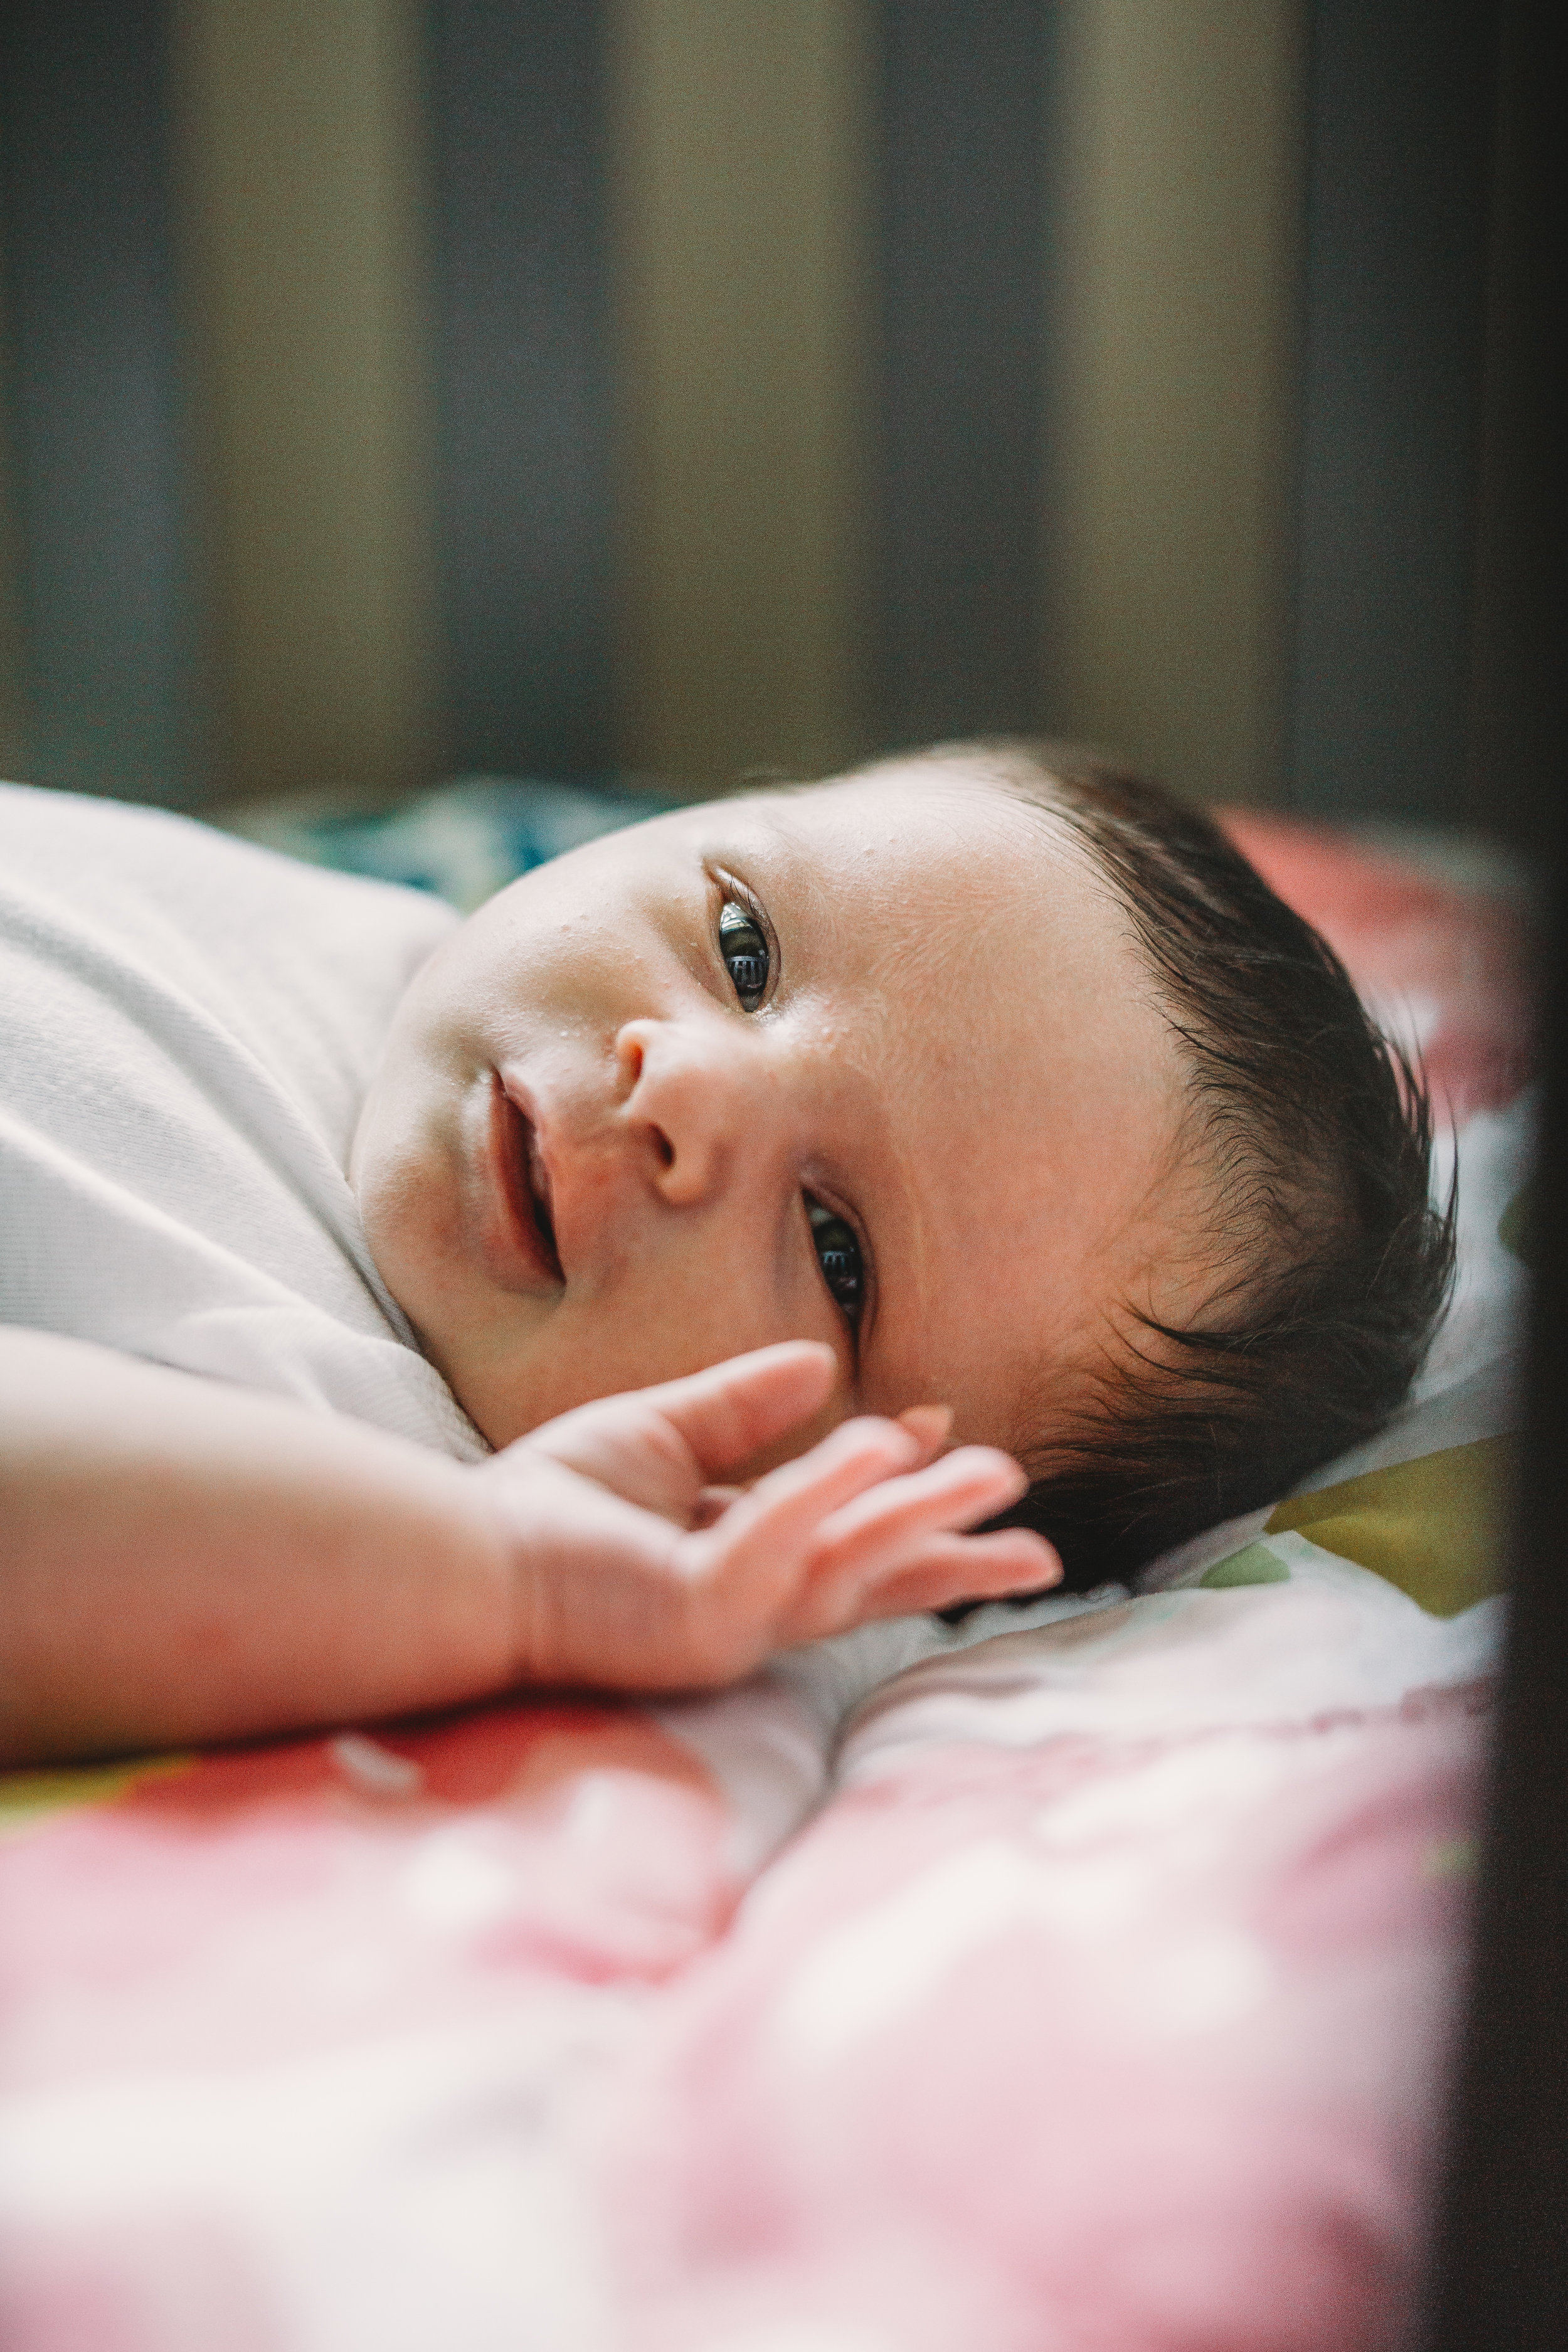 Newborn baby looking at camera in crib